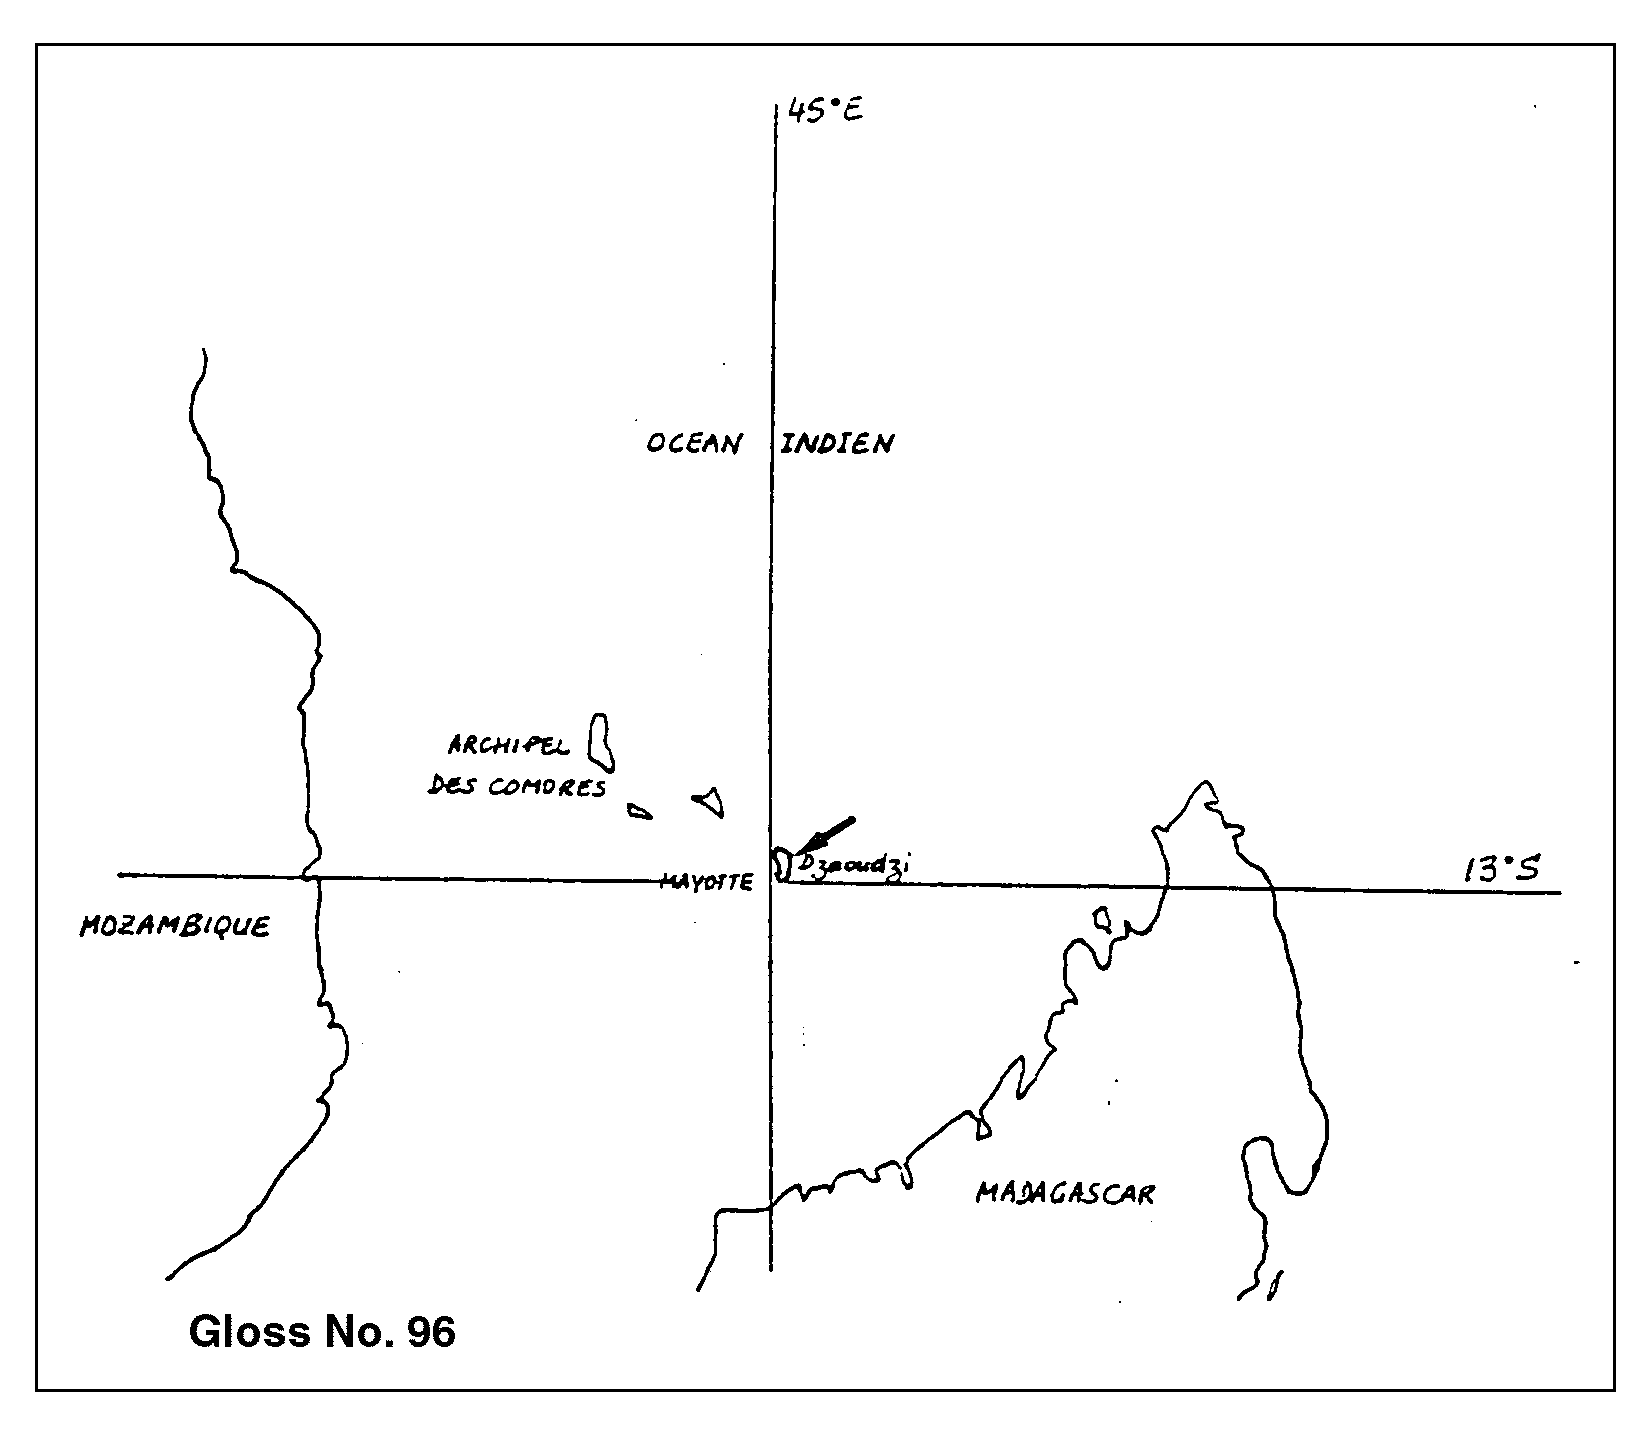 Location map for Dzaoudzi (Mayotte), France